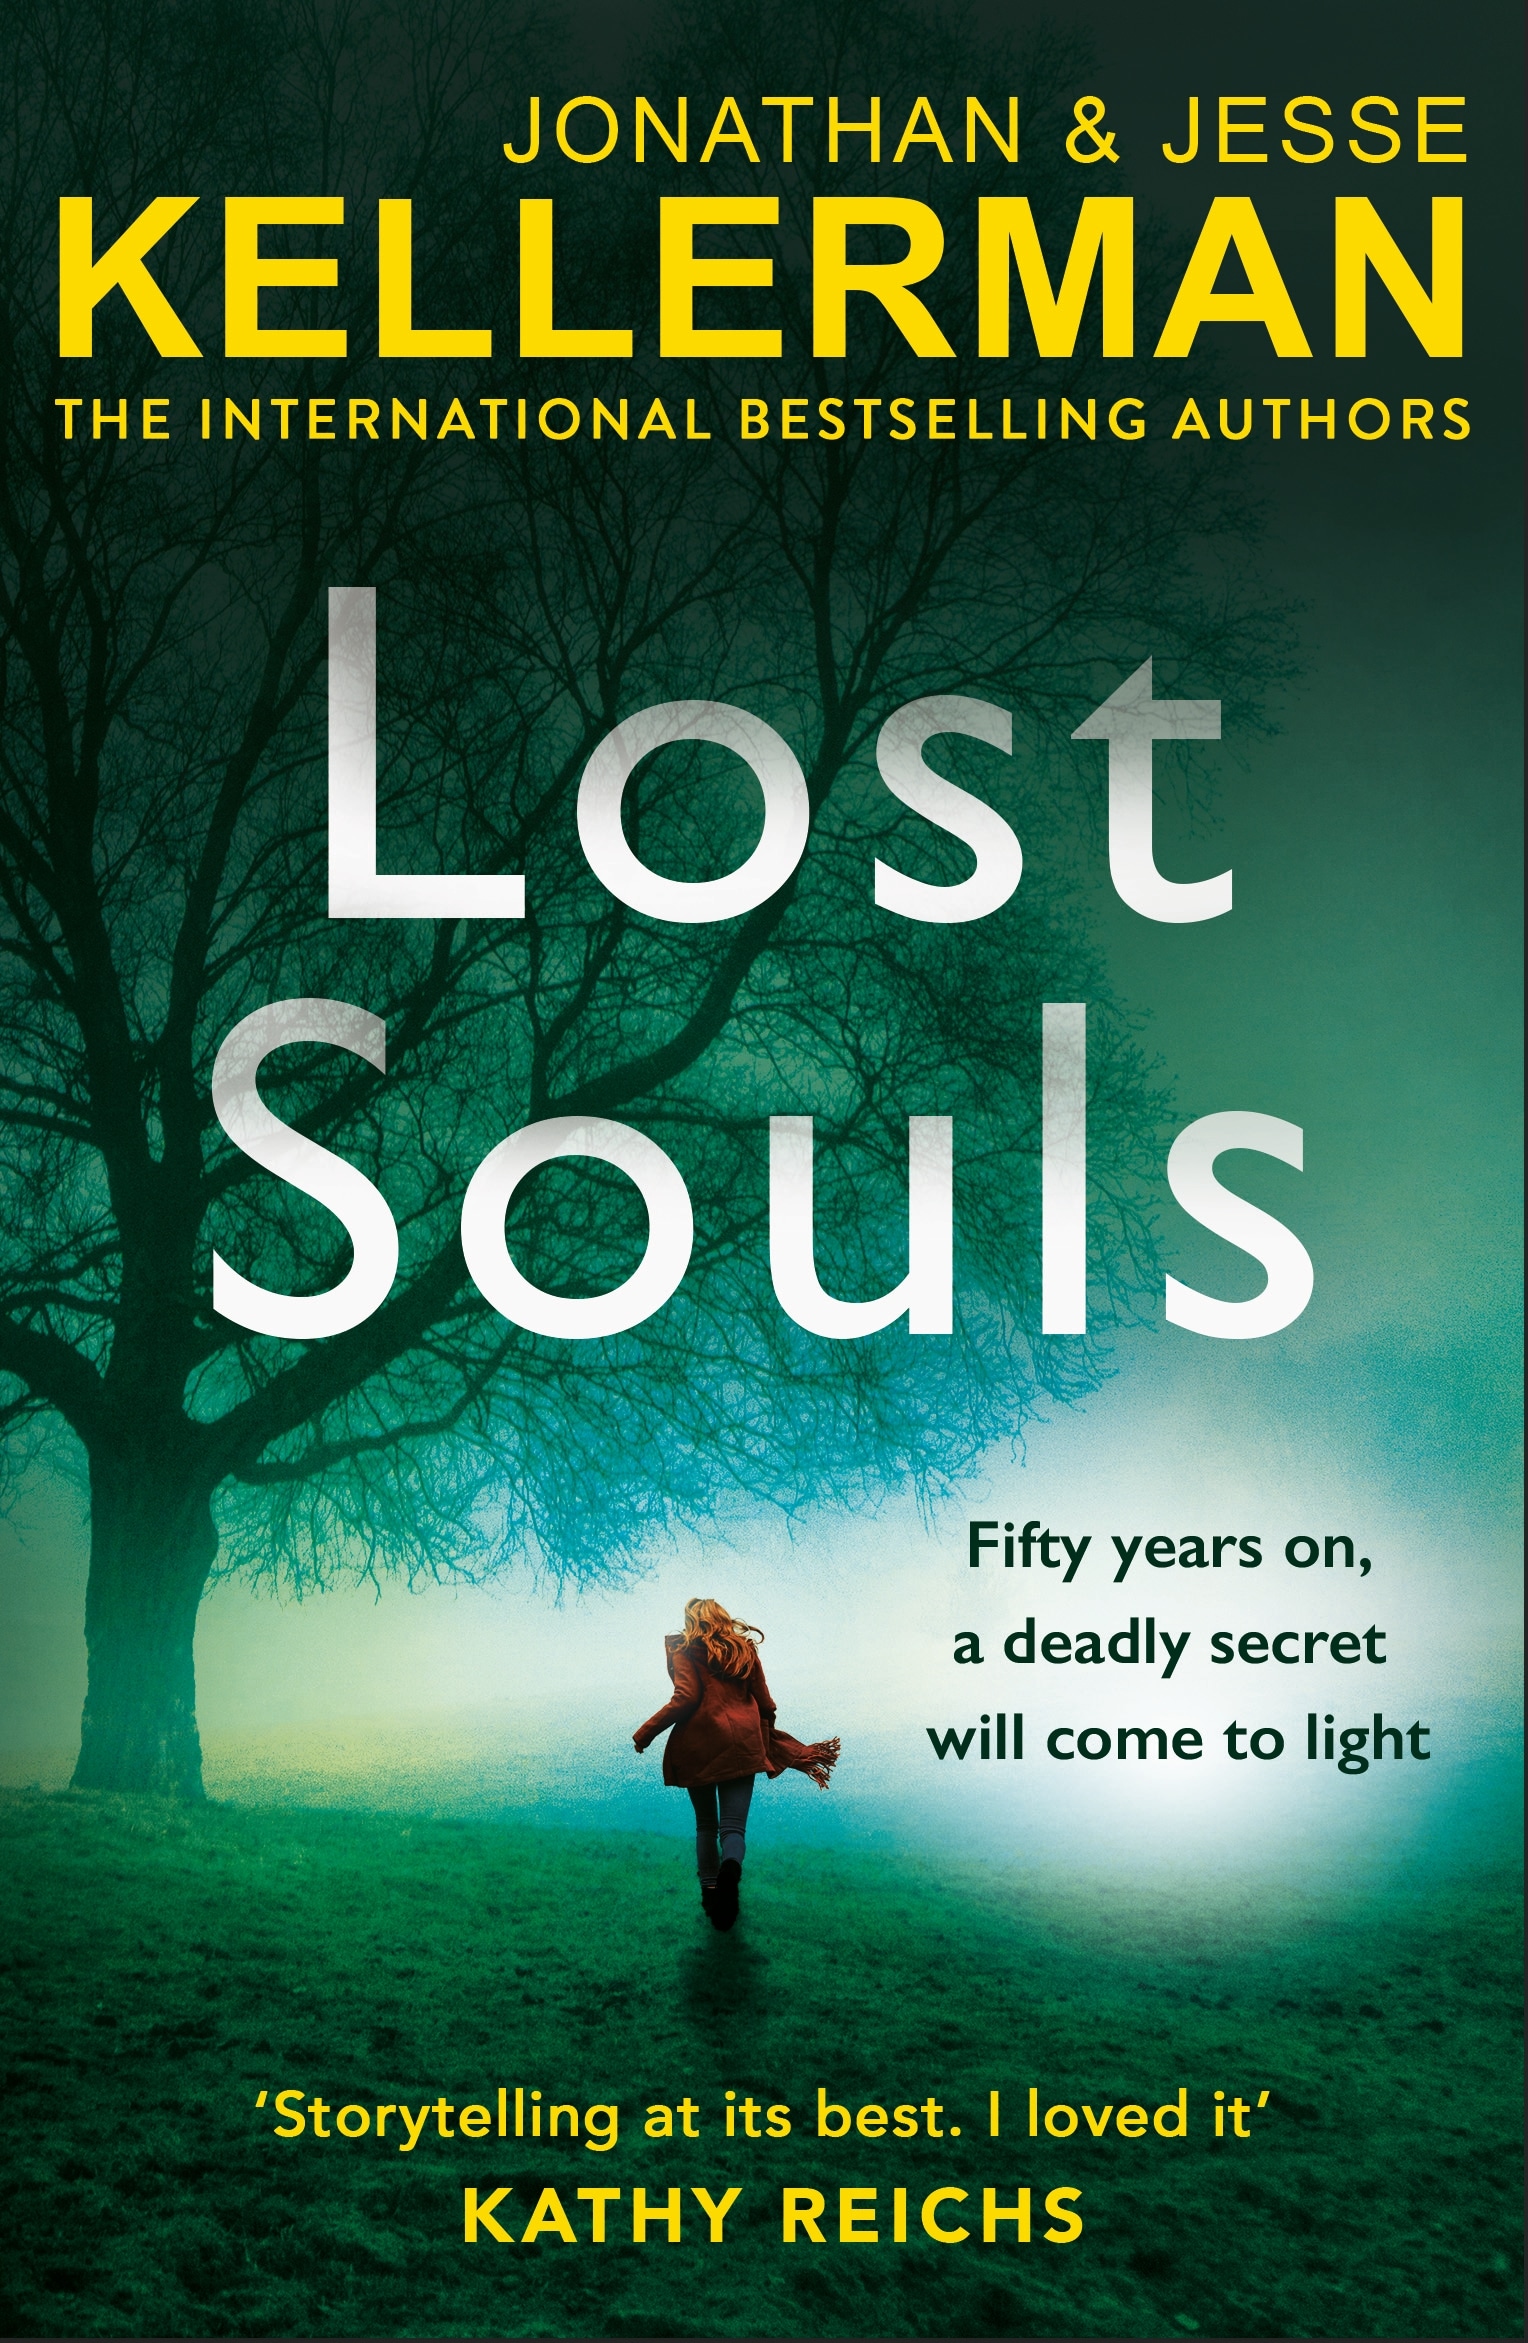 Book “Lost Souls” by Jonathan Kellerman — April 15, 2021